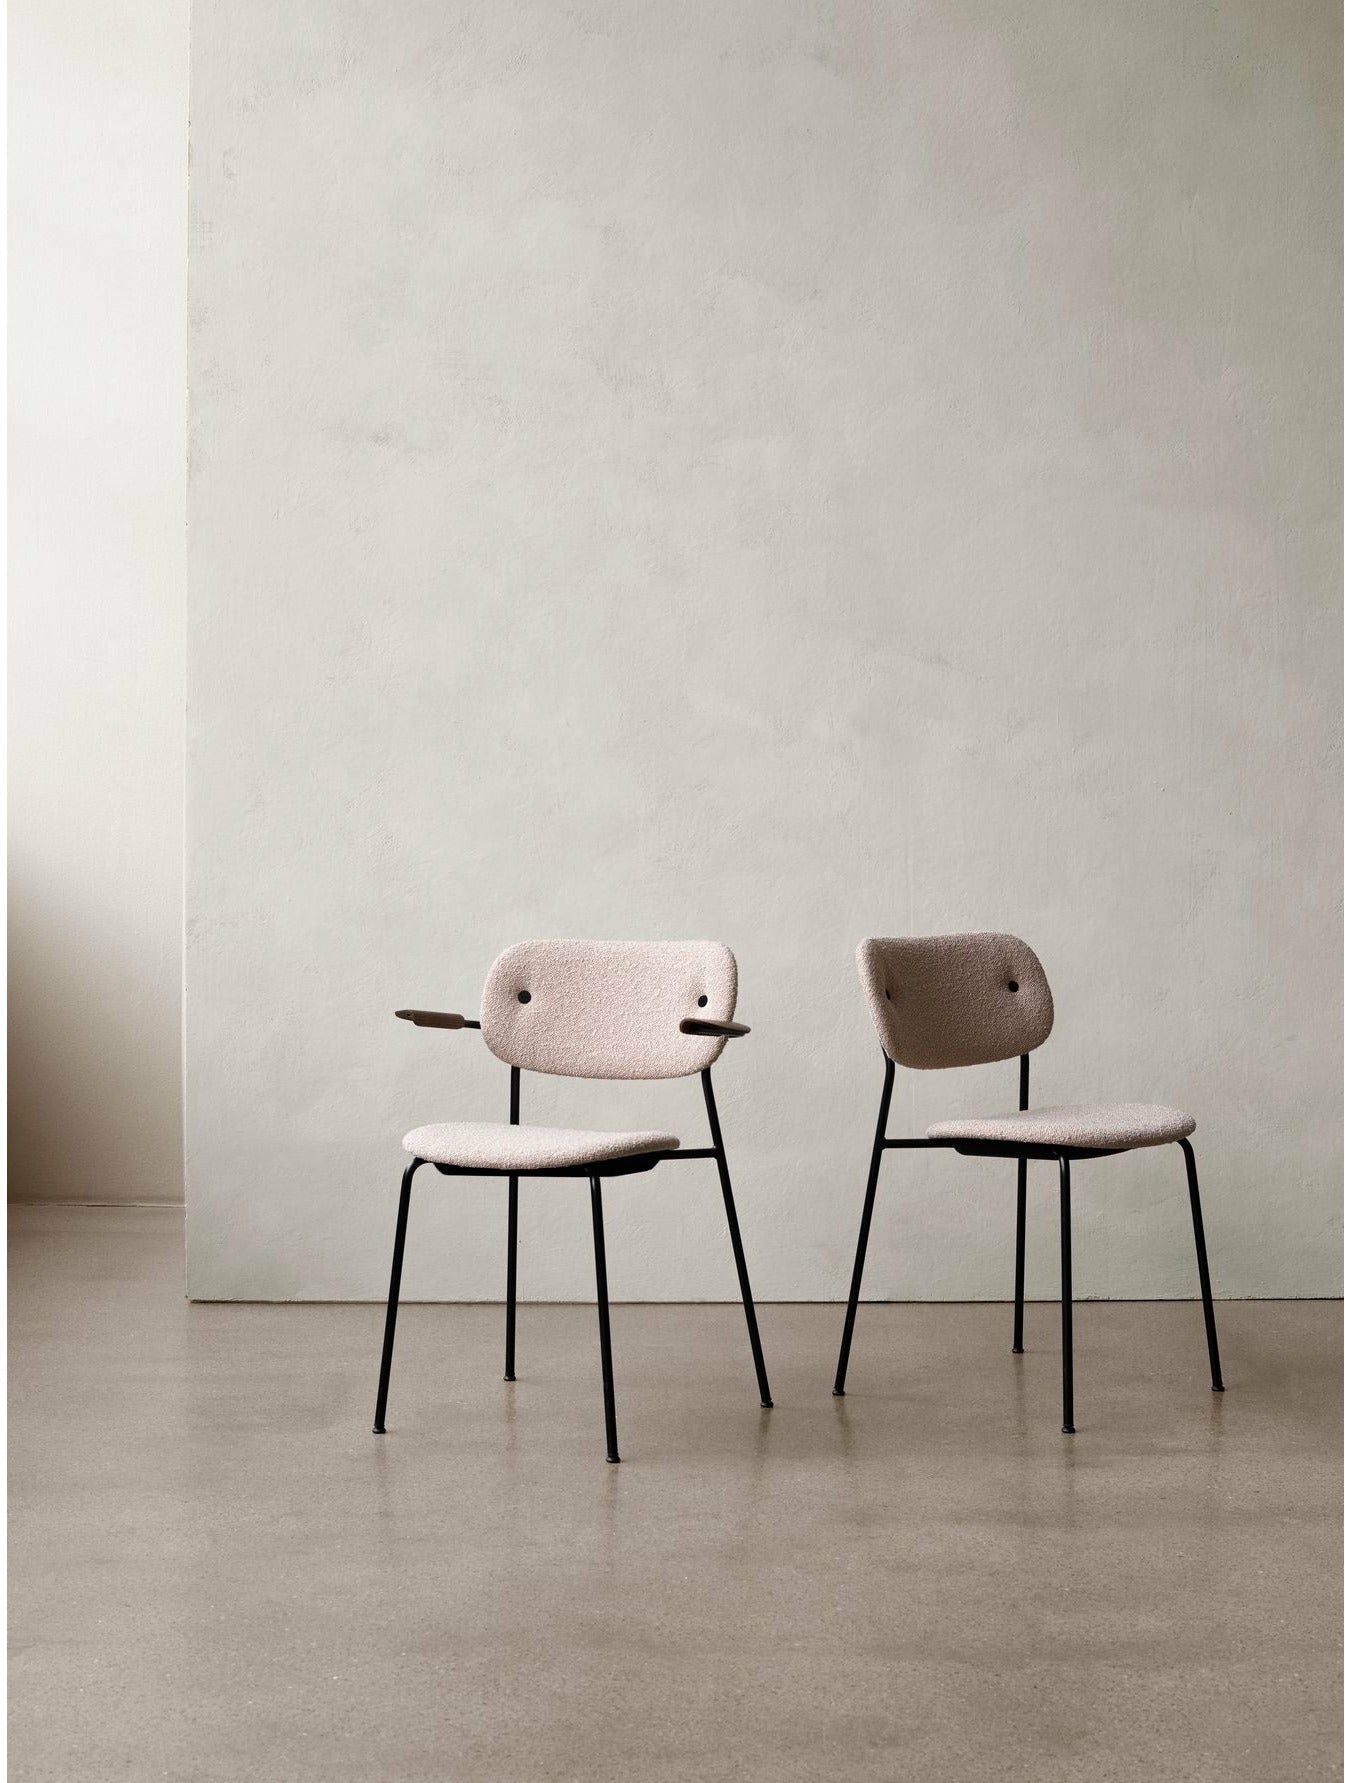 Audo Copenhagen Co silla tapicería completa con roble manchado oscuro del reposabrazos, Chrome/Lupo T19028/004